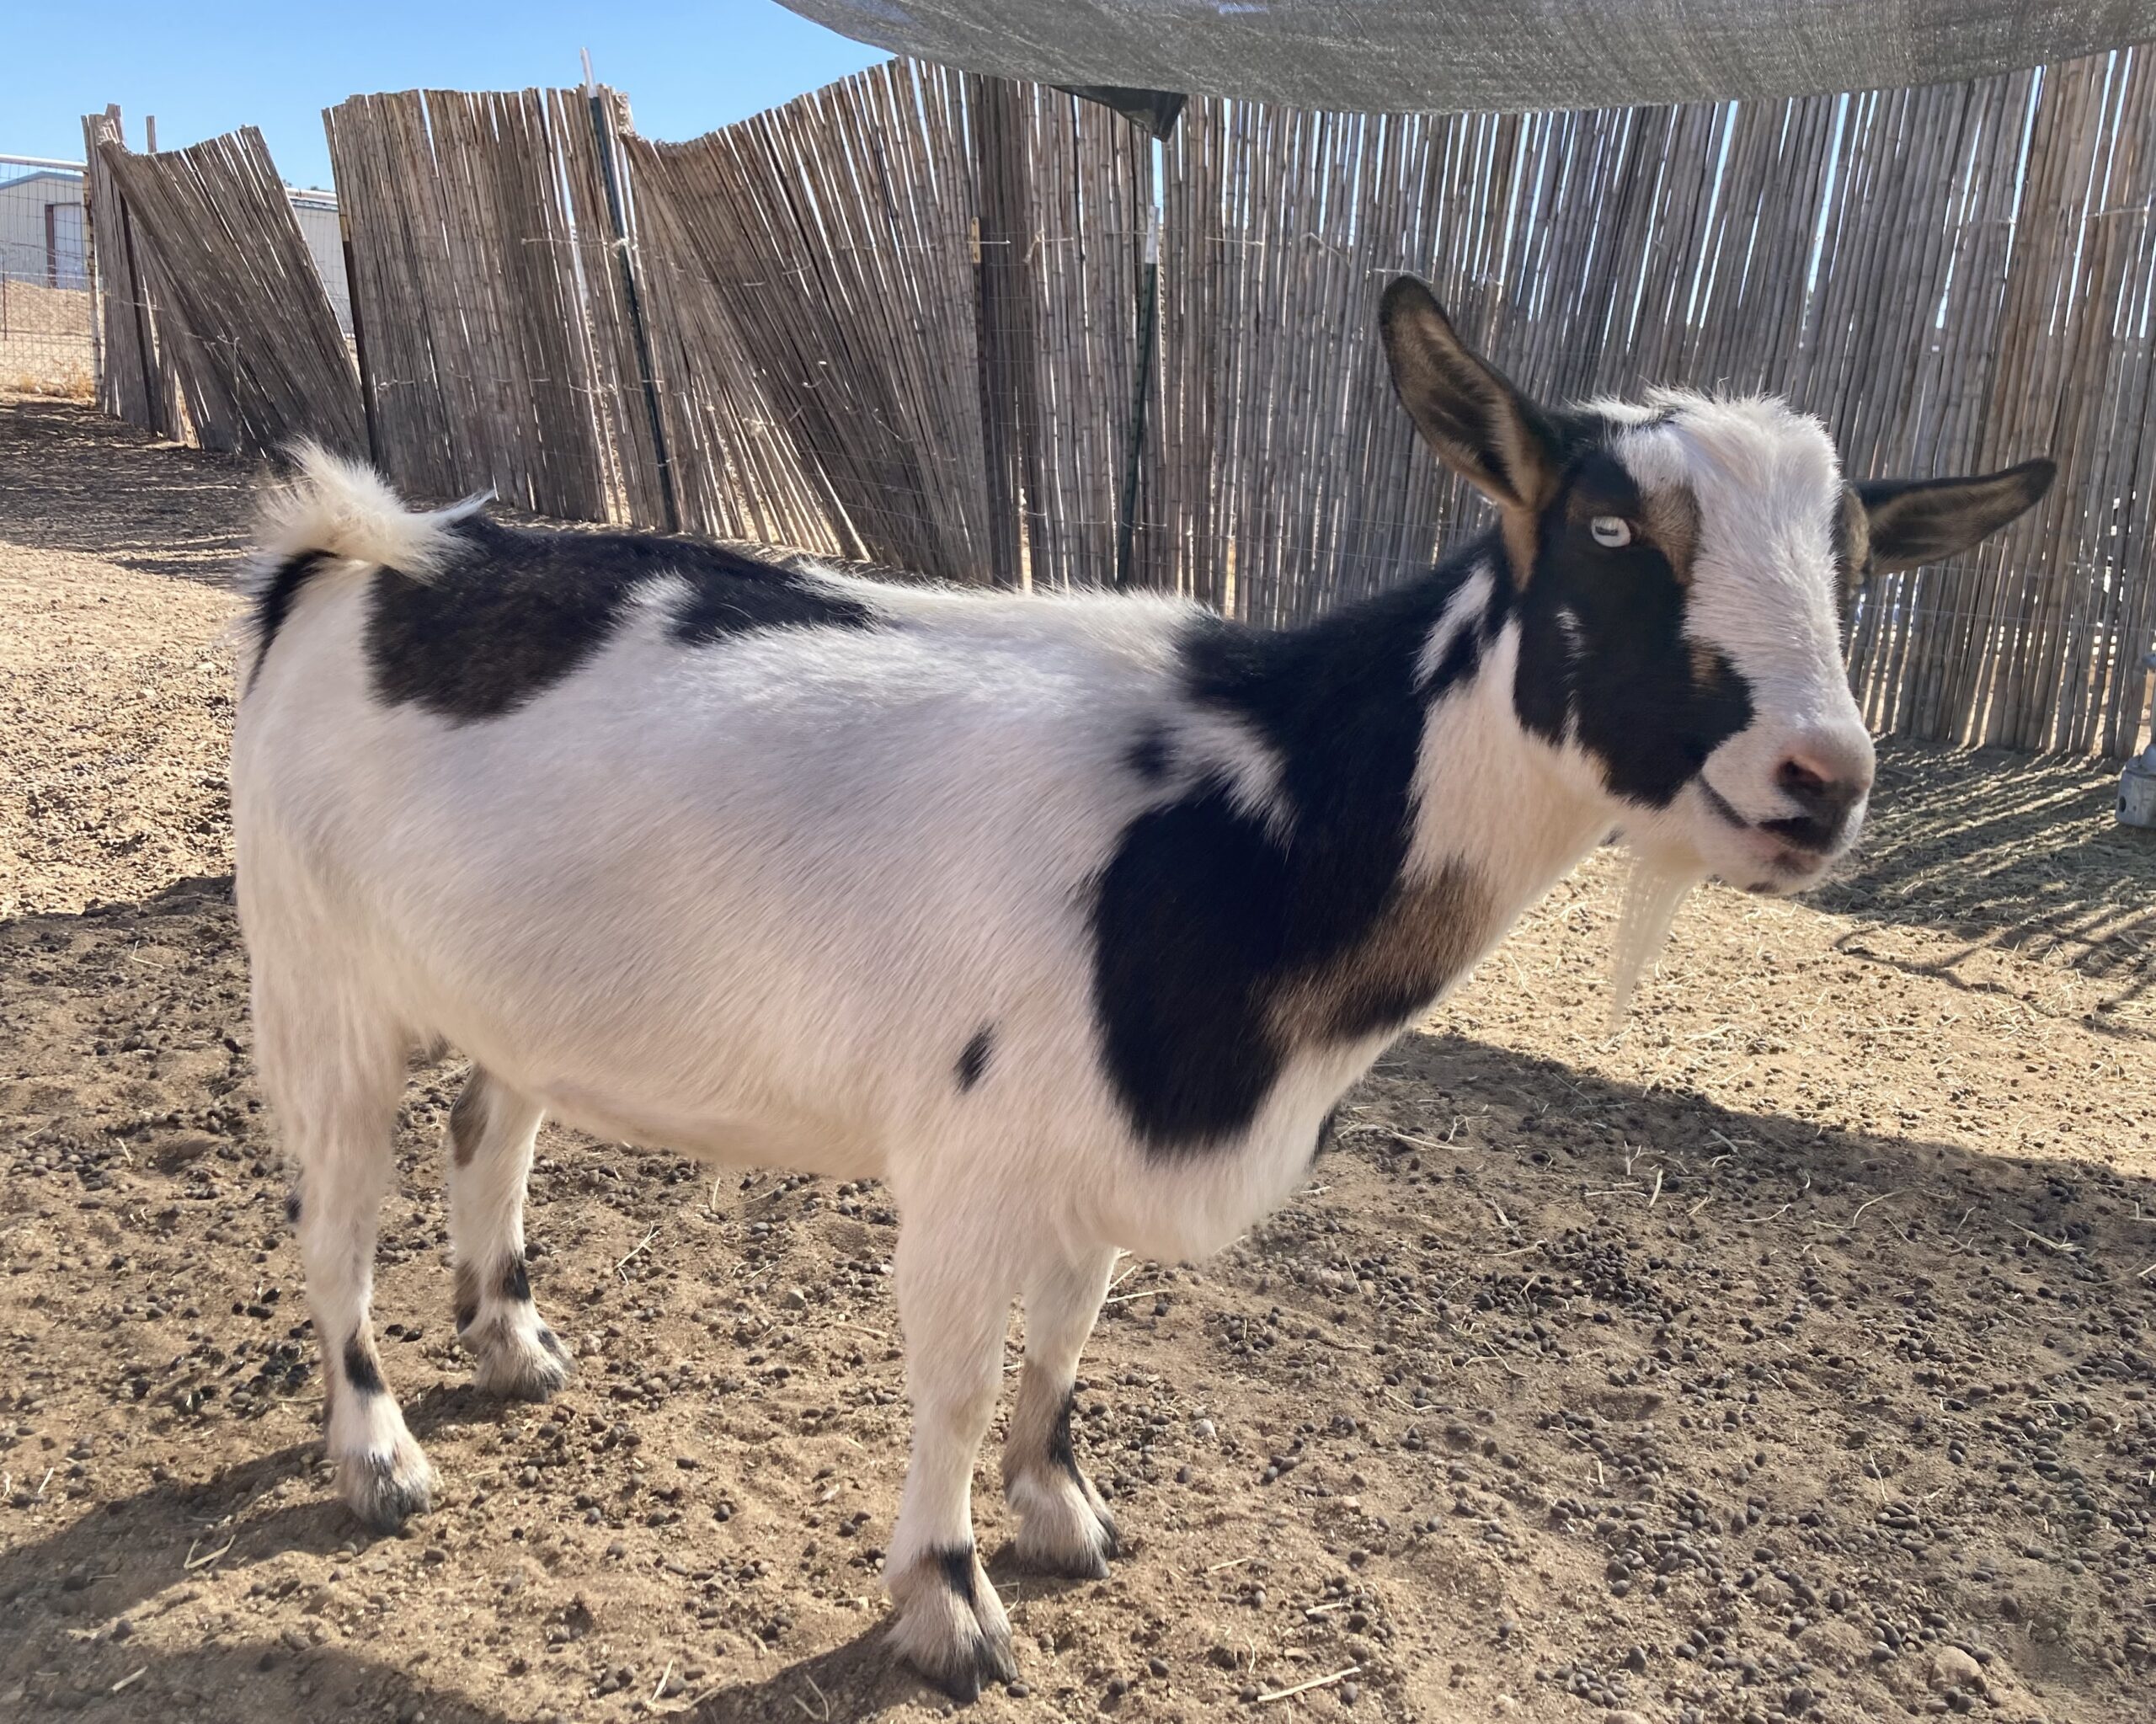 Purebred Nigerian Dwarf Goat named Anastasia